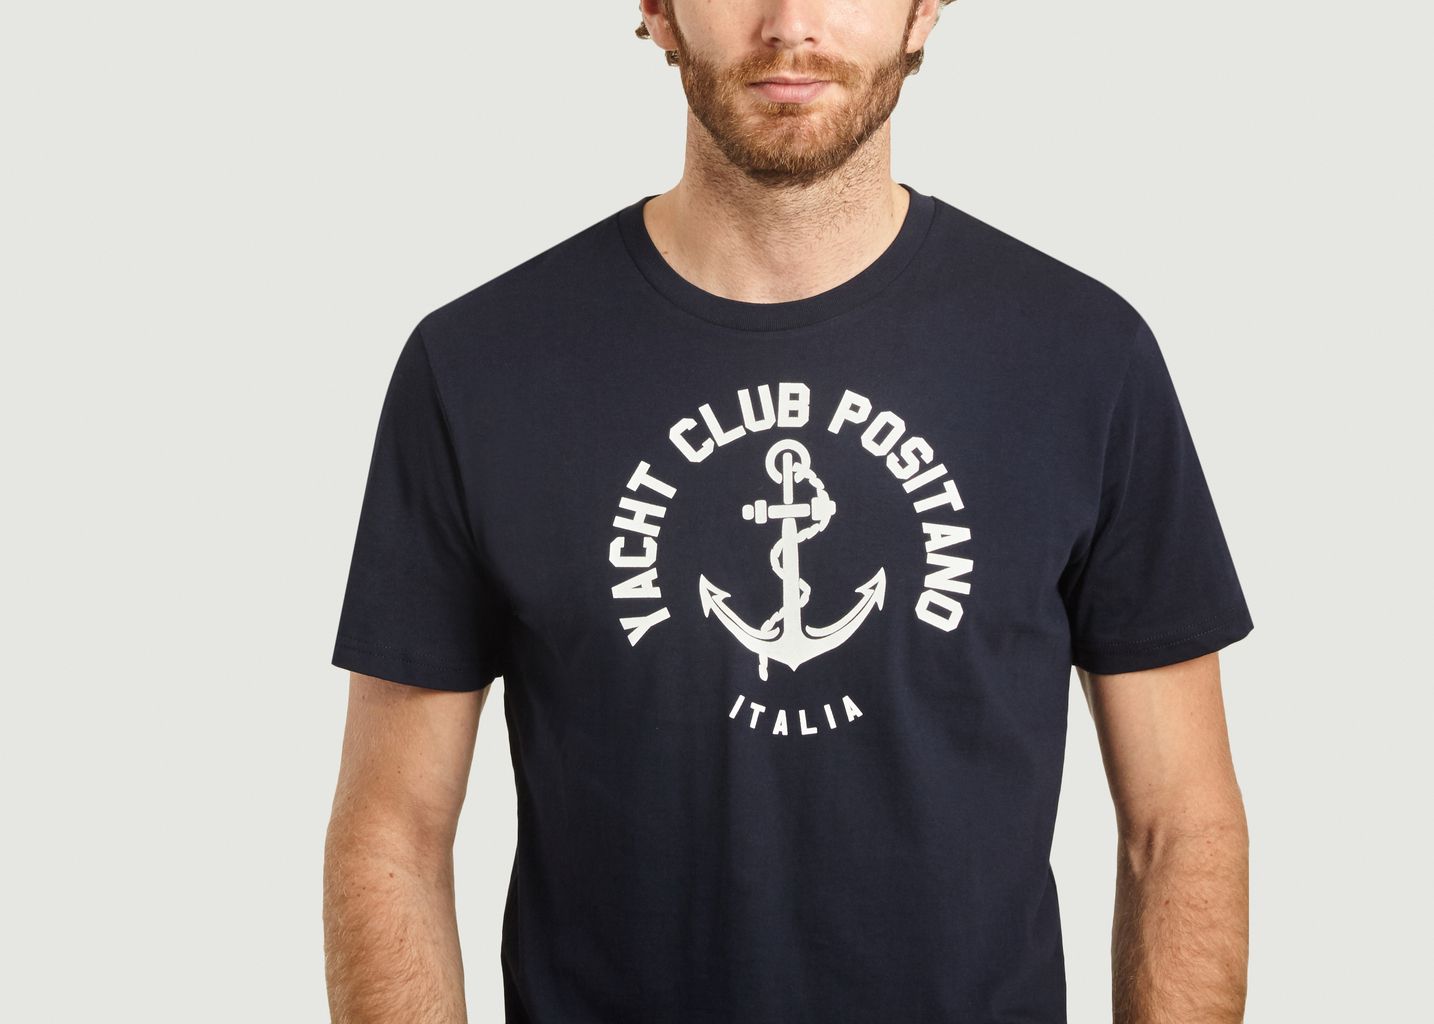 T-shirt imprimé Yacht Club Positano Italia - Harmony